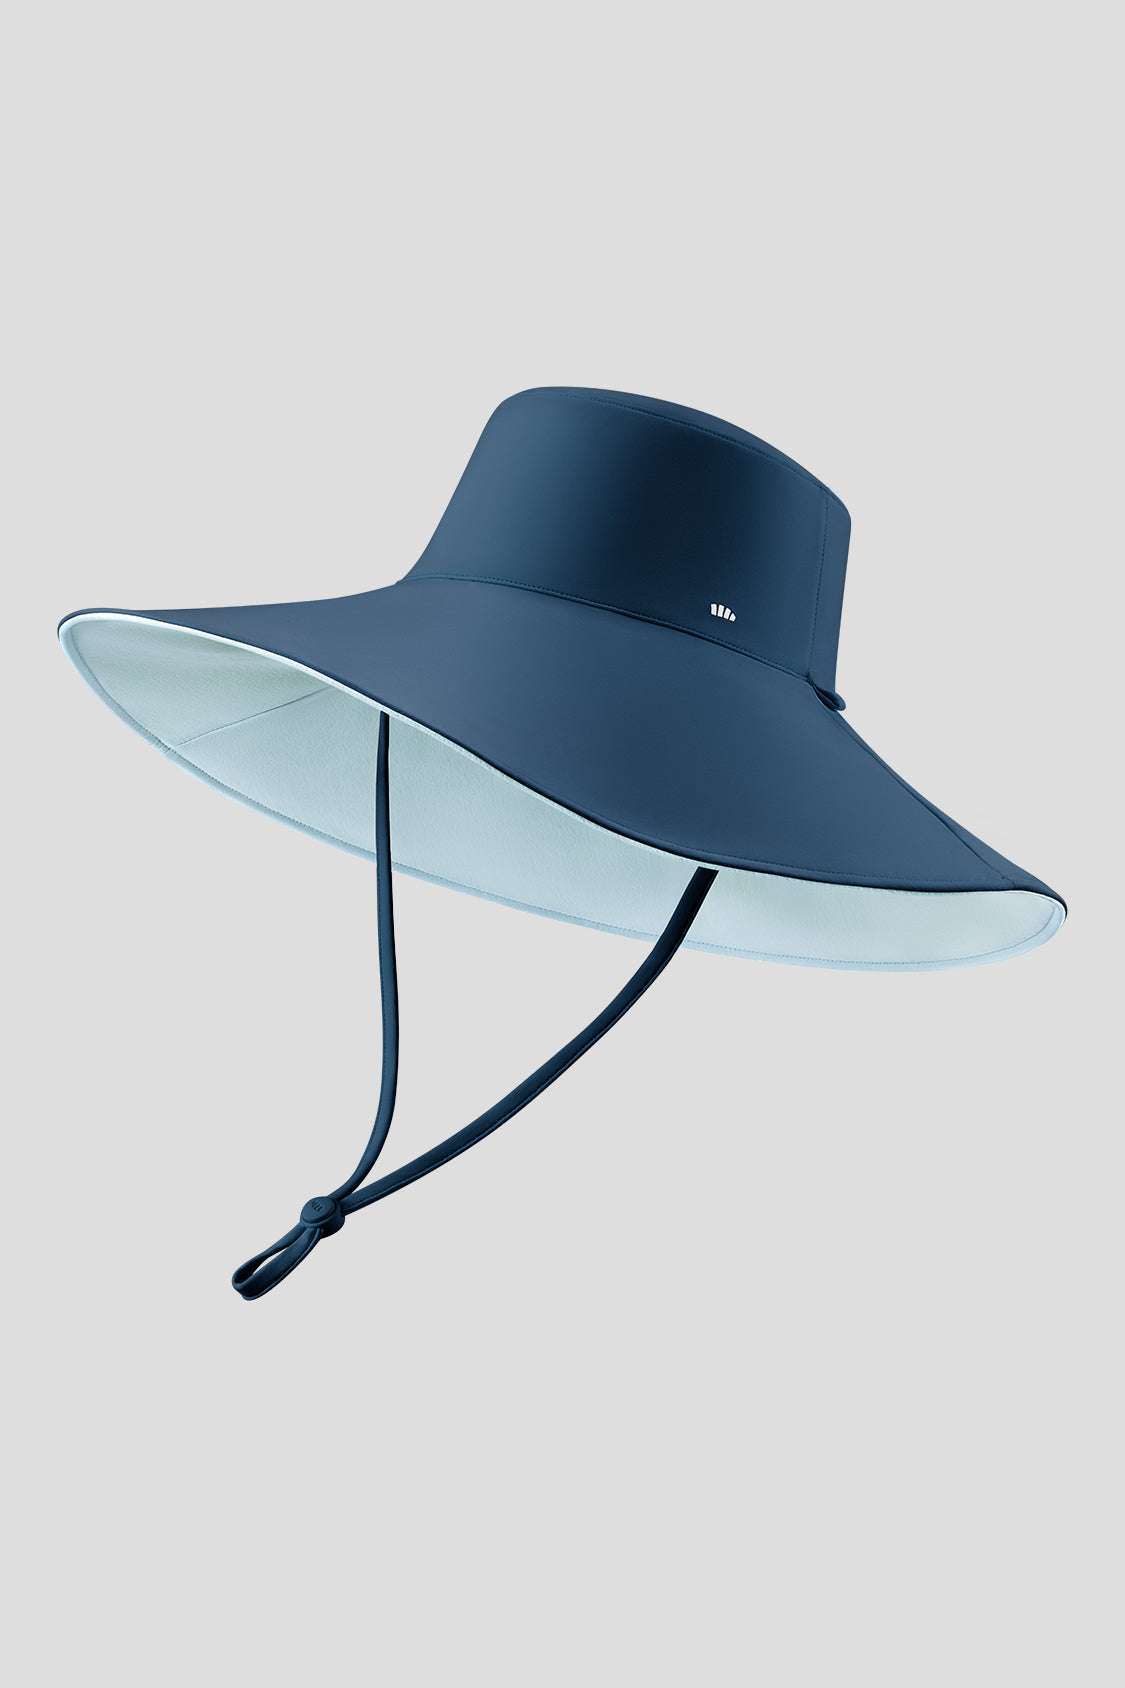  Aenmt Sun Hat for Men/Women, Wide Brim UV Protection